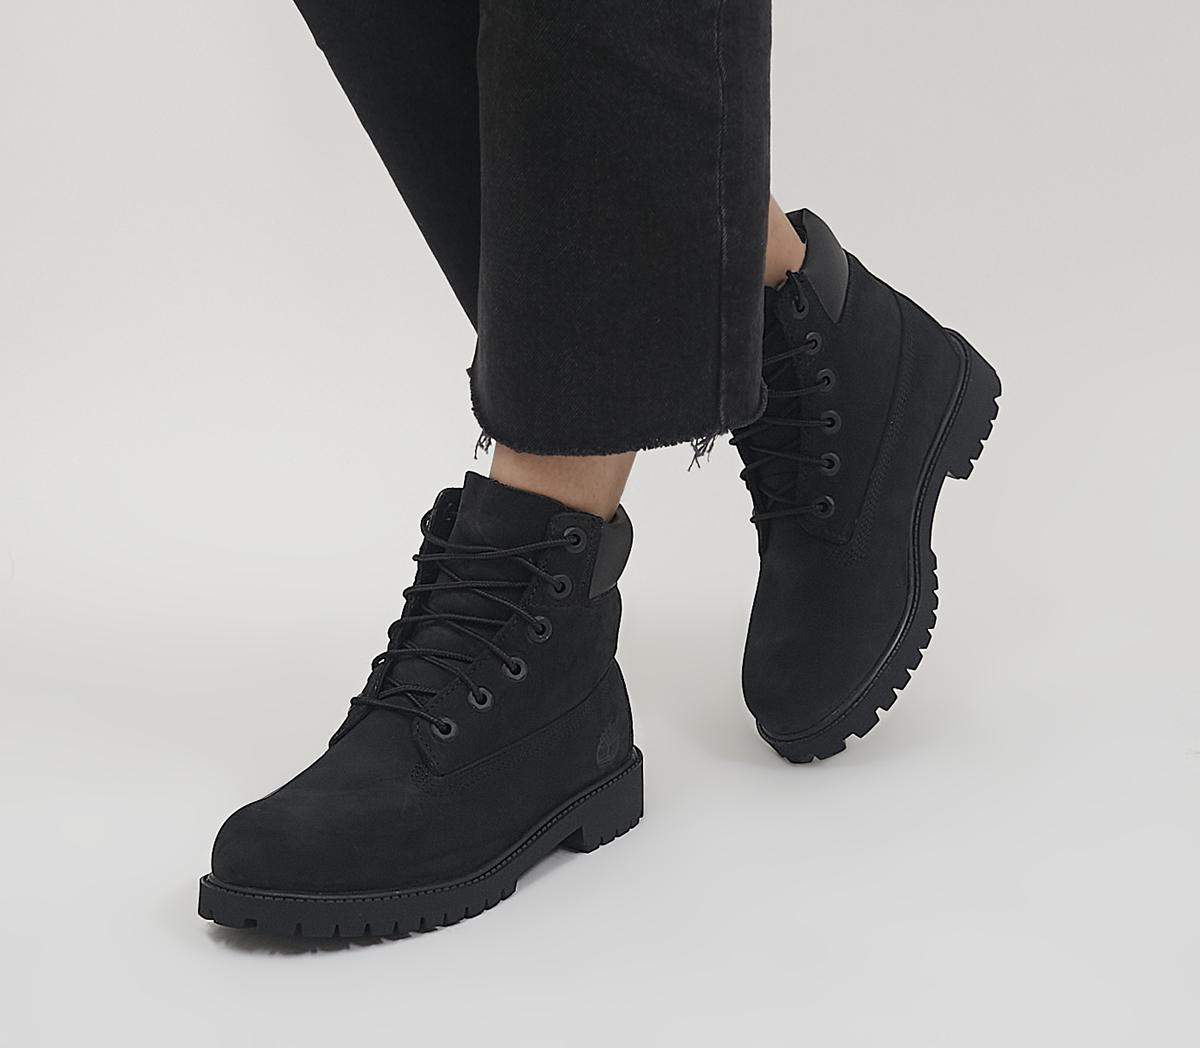 Timberland Junior 6 Inch Premium Waterproof Black - Women's Ankle Boots